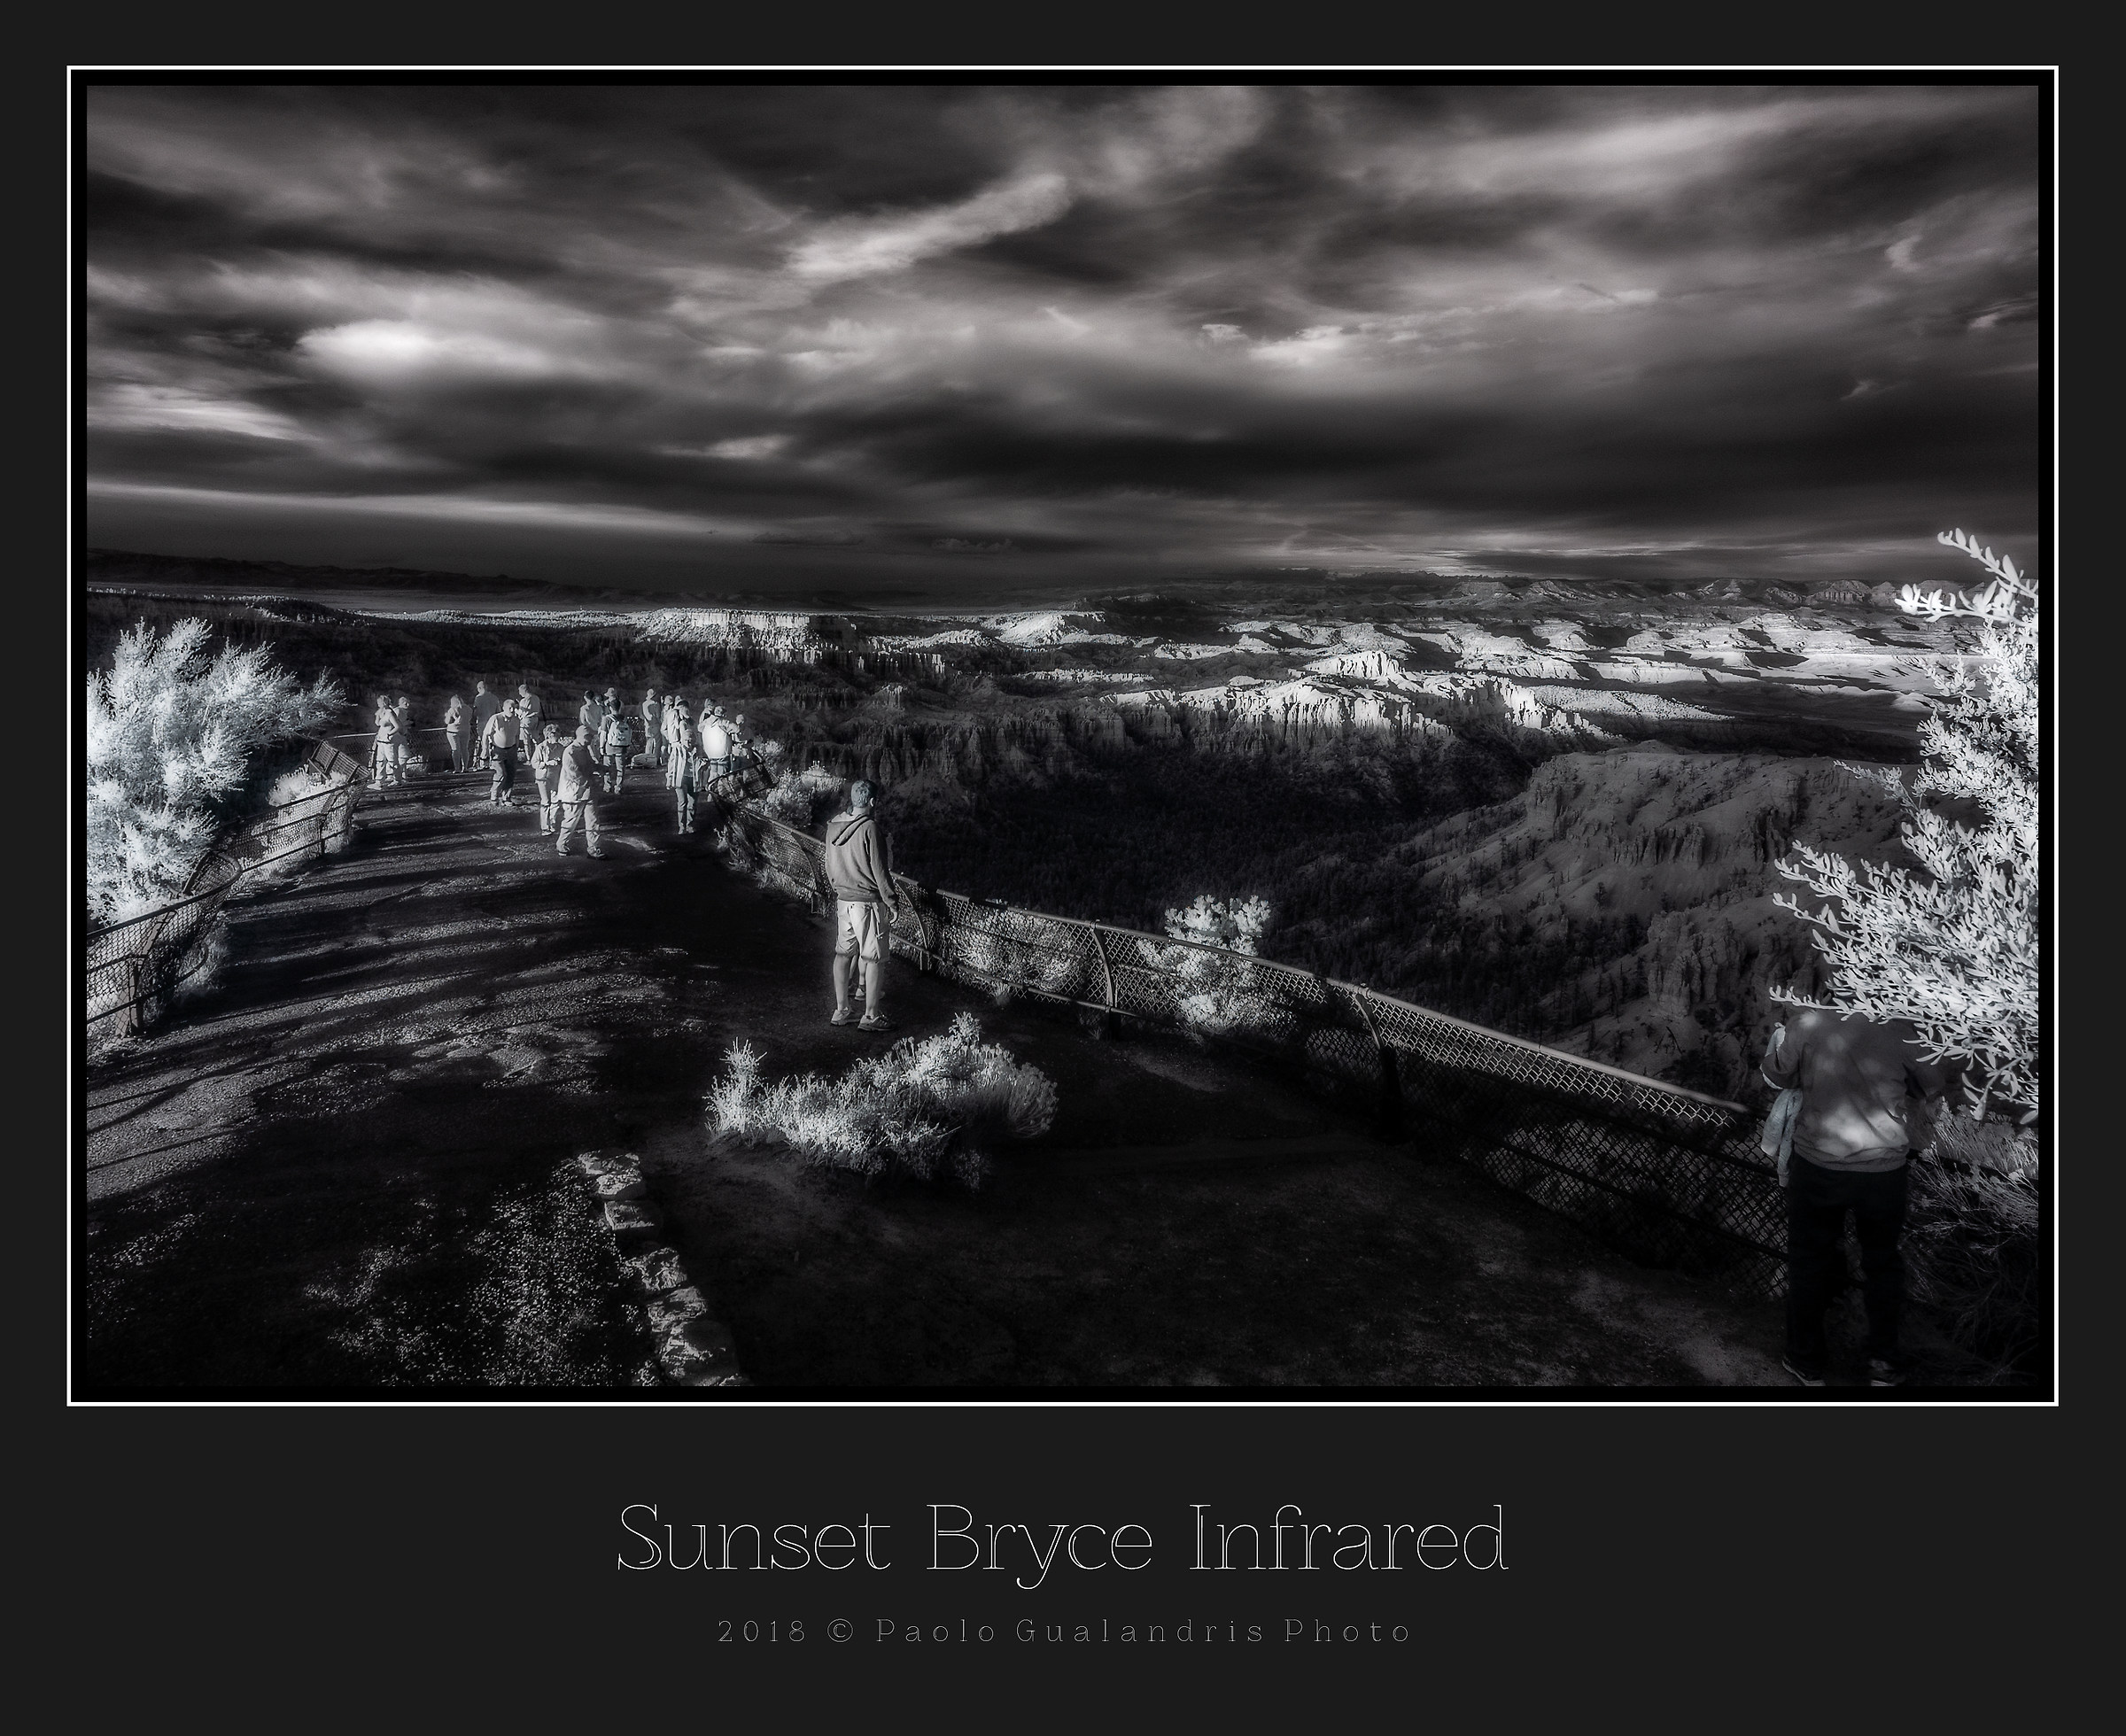 Sunset Bryce Infrared...